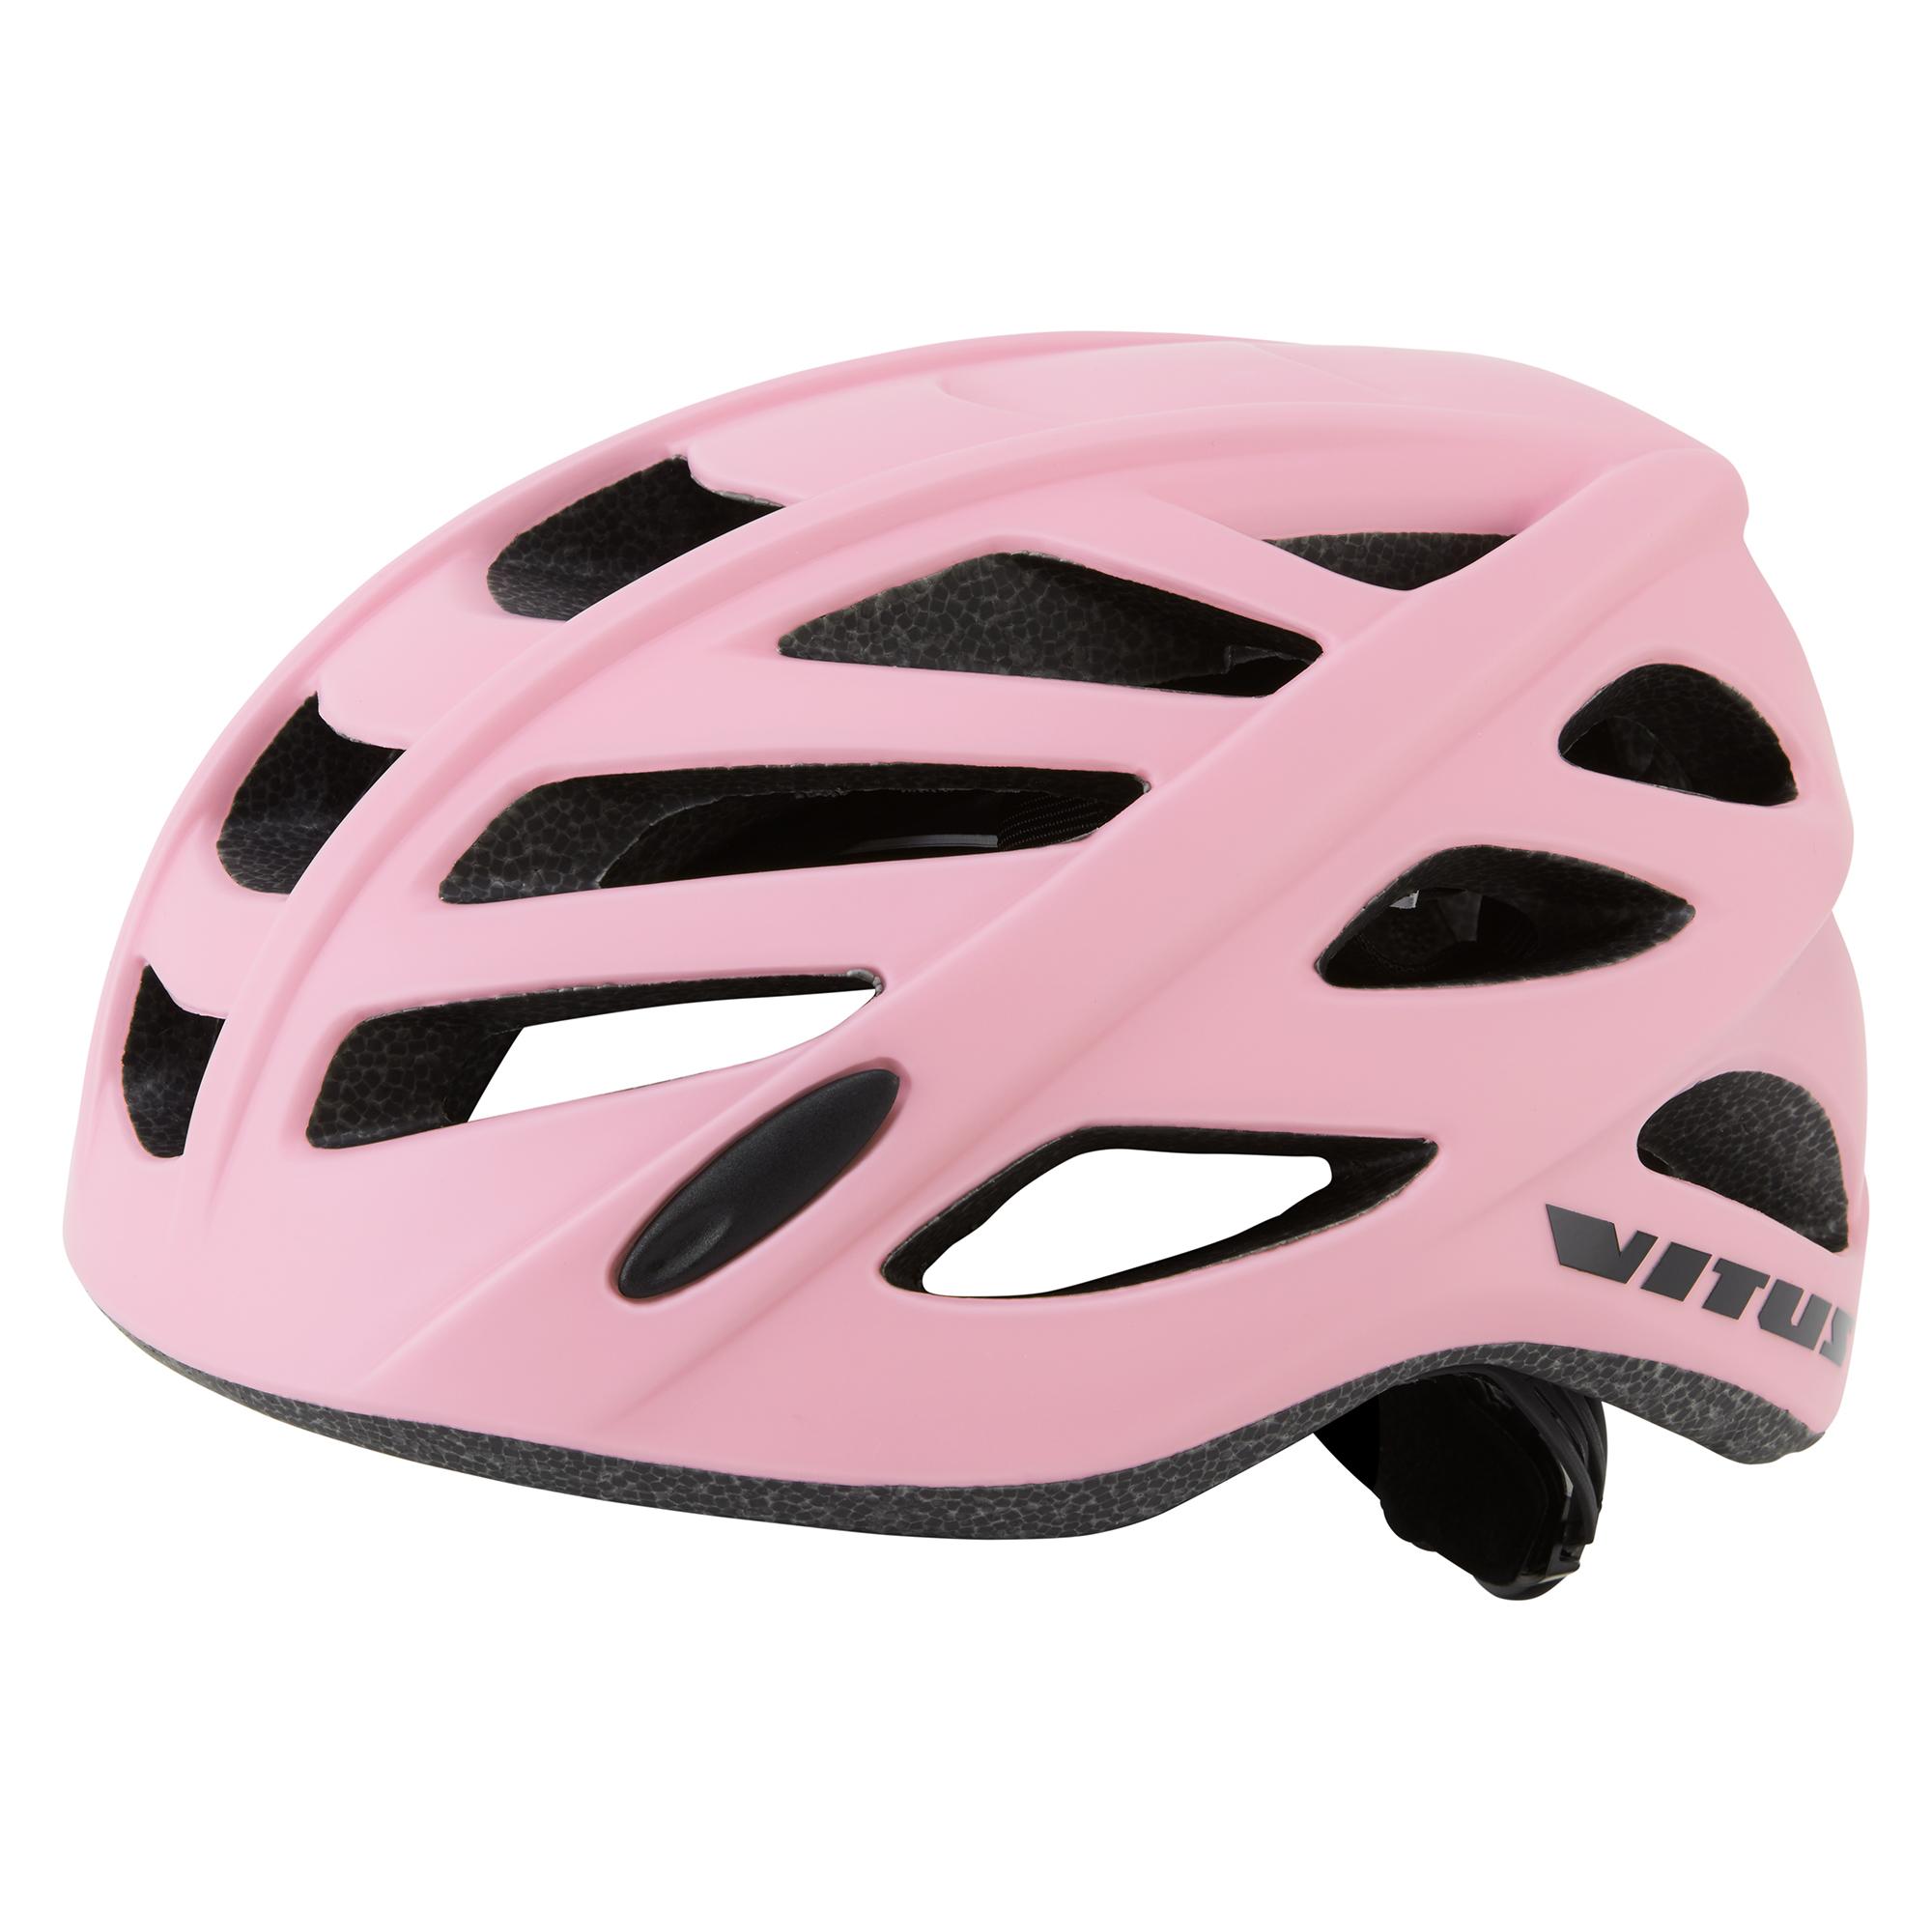 Vitus Noodle Helmet  Pink